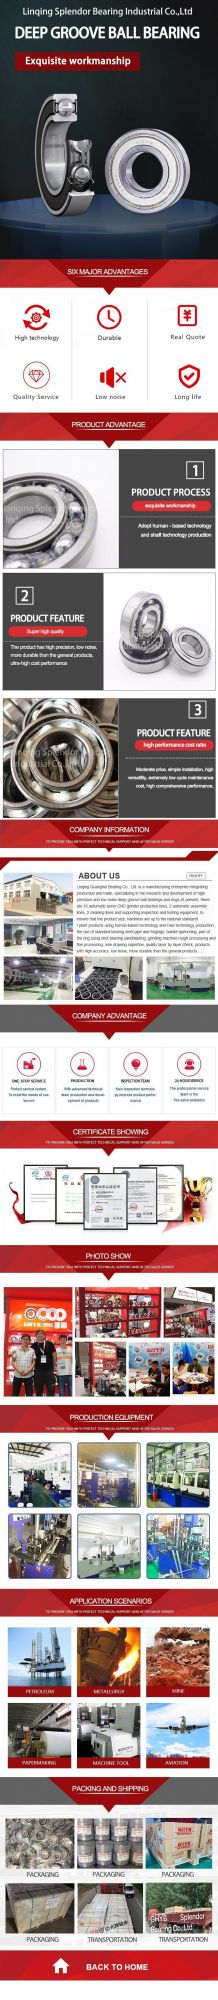 China Factory Distributor Supplier of Deep Groove Ball Bearings for Motors, Compressors, Alternators 6204-2rz/P6/Z2V2